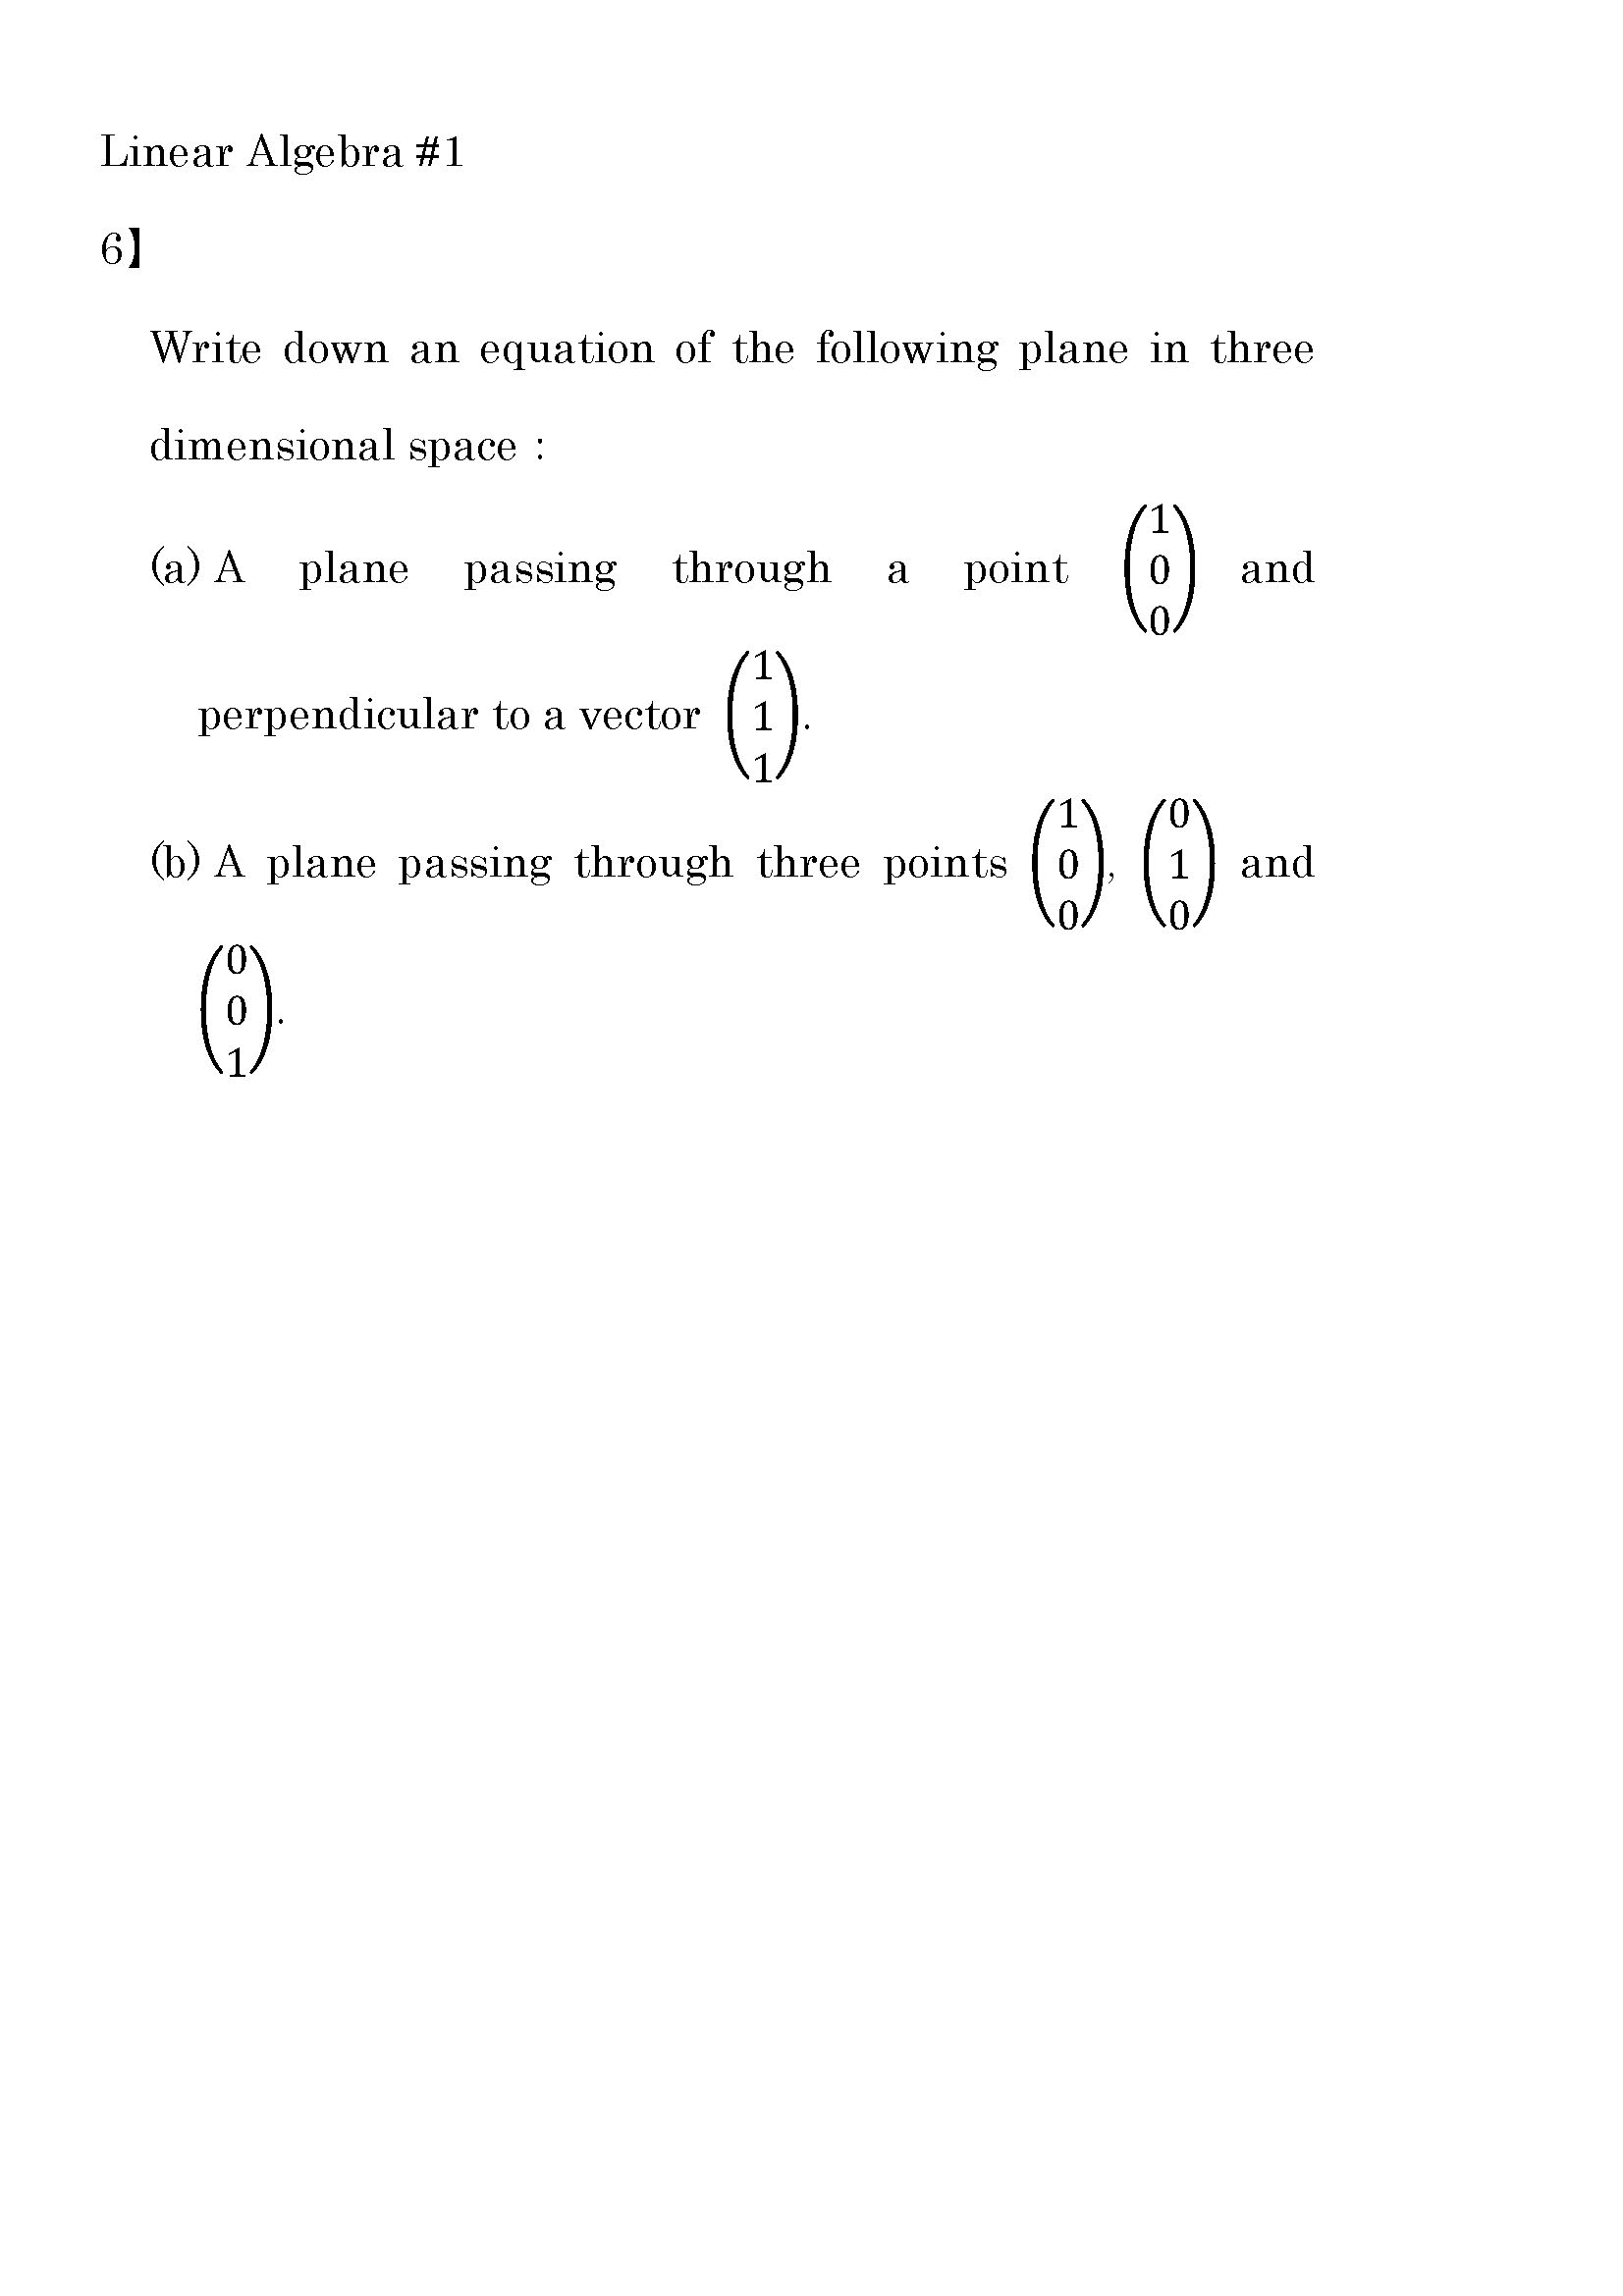 Linear_Algebra_Quiz_1-6-tate.jpg